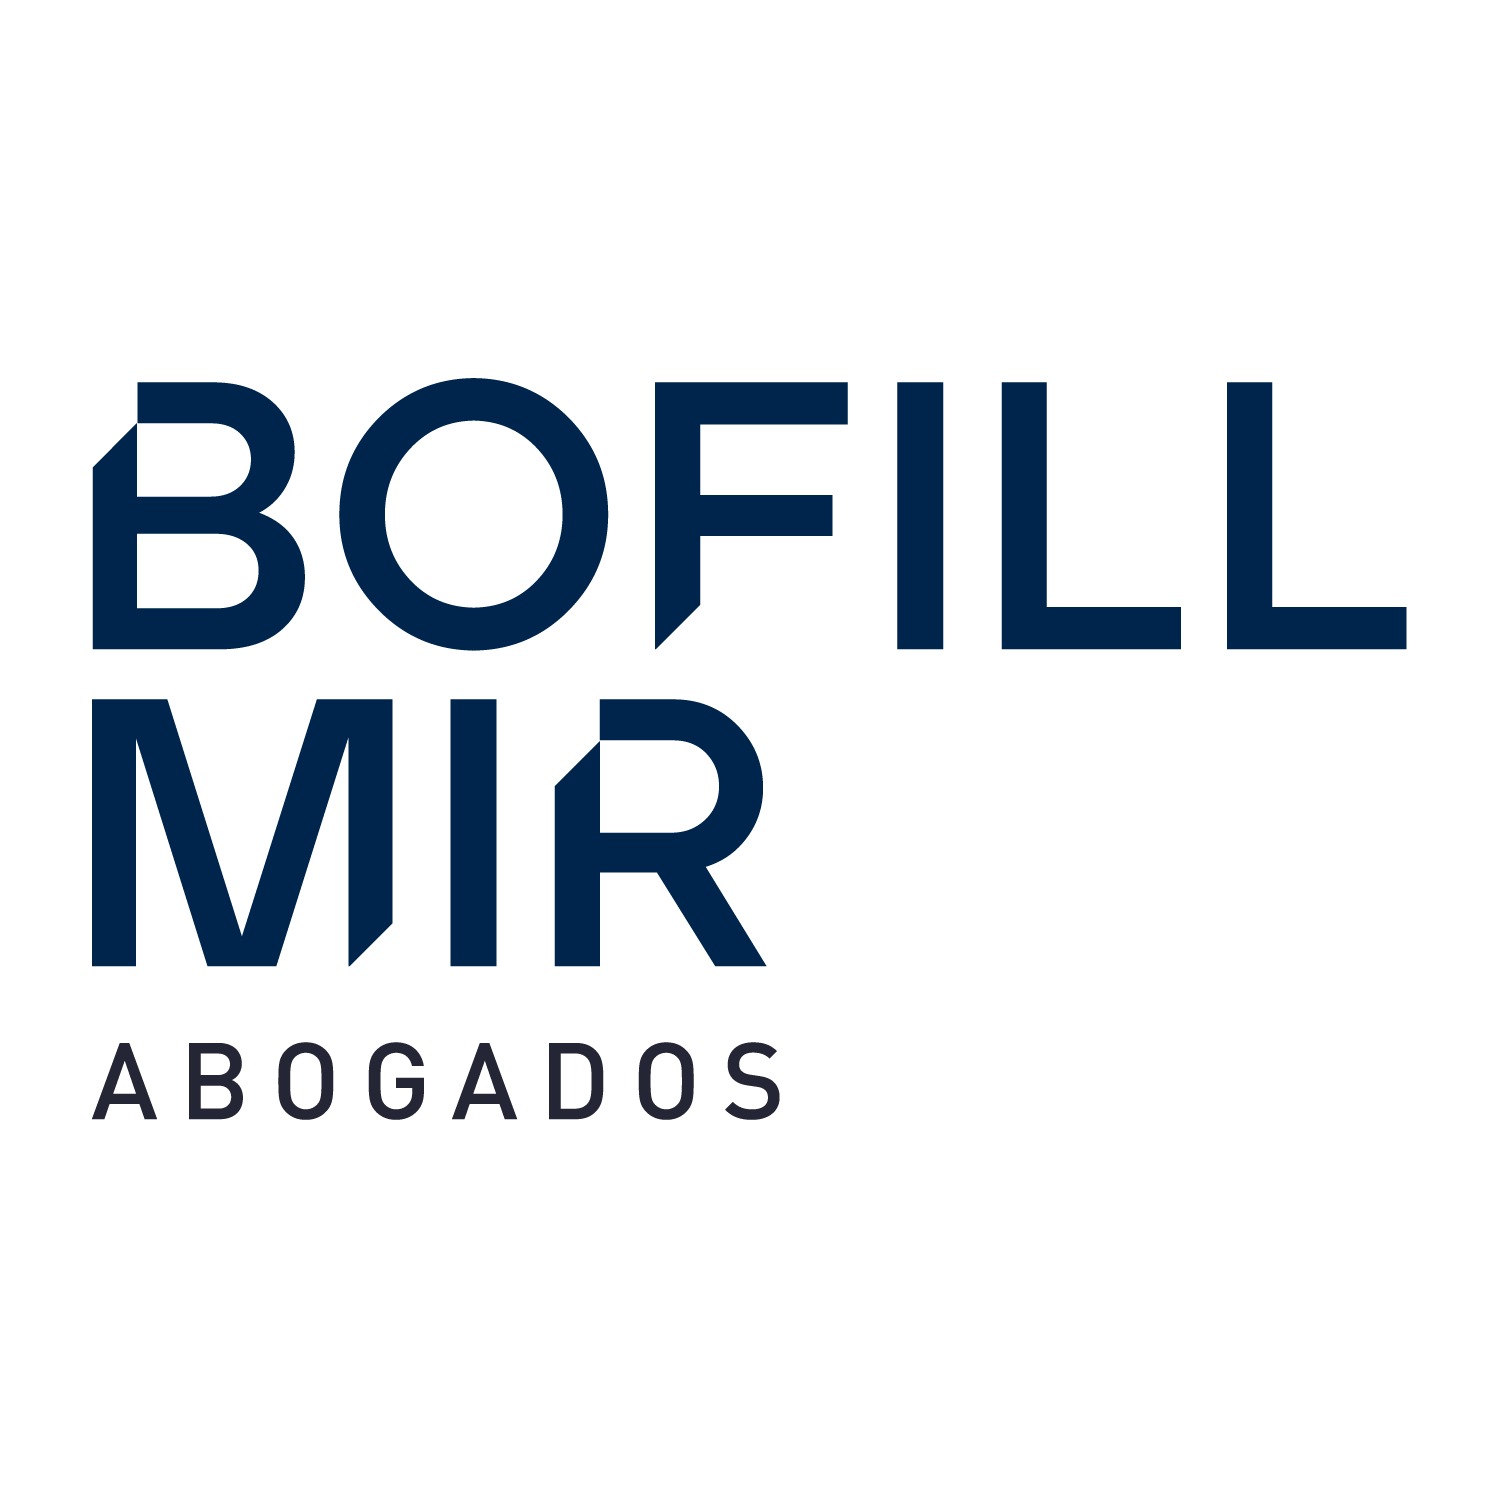 Bofill Mir 